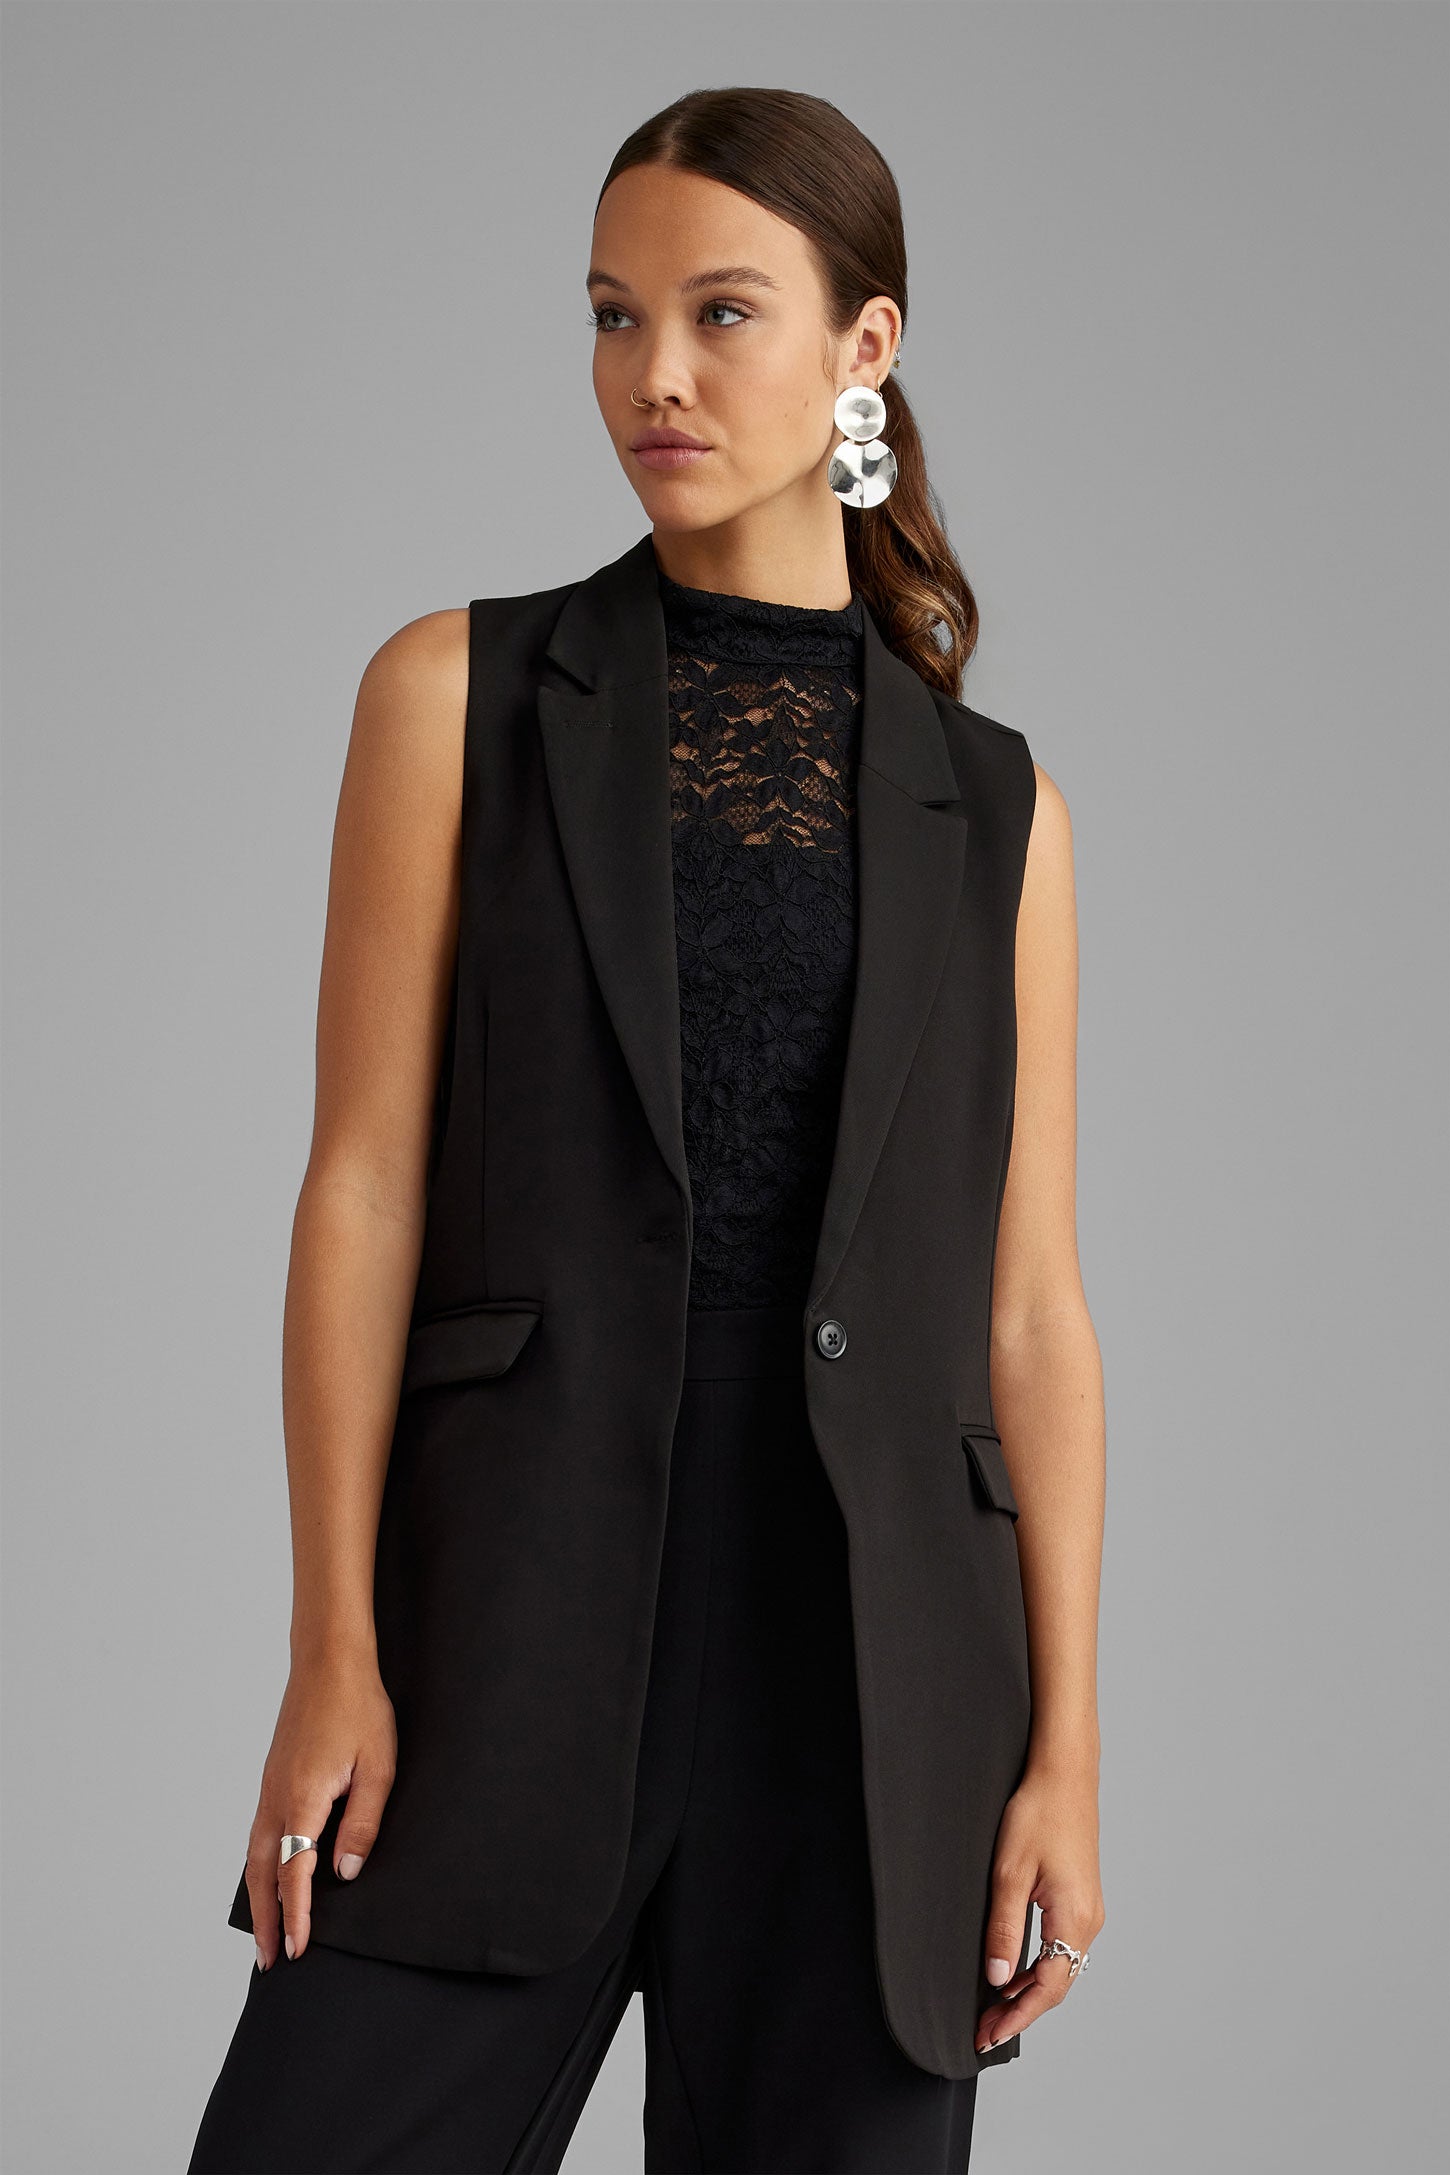 Women Formal Long Sleeve Zipper Blazer Suit Slim Fit Jacket Tops  Coat(XXLRed) : Amazon.in: Clothing & Accessories